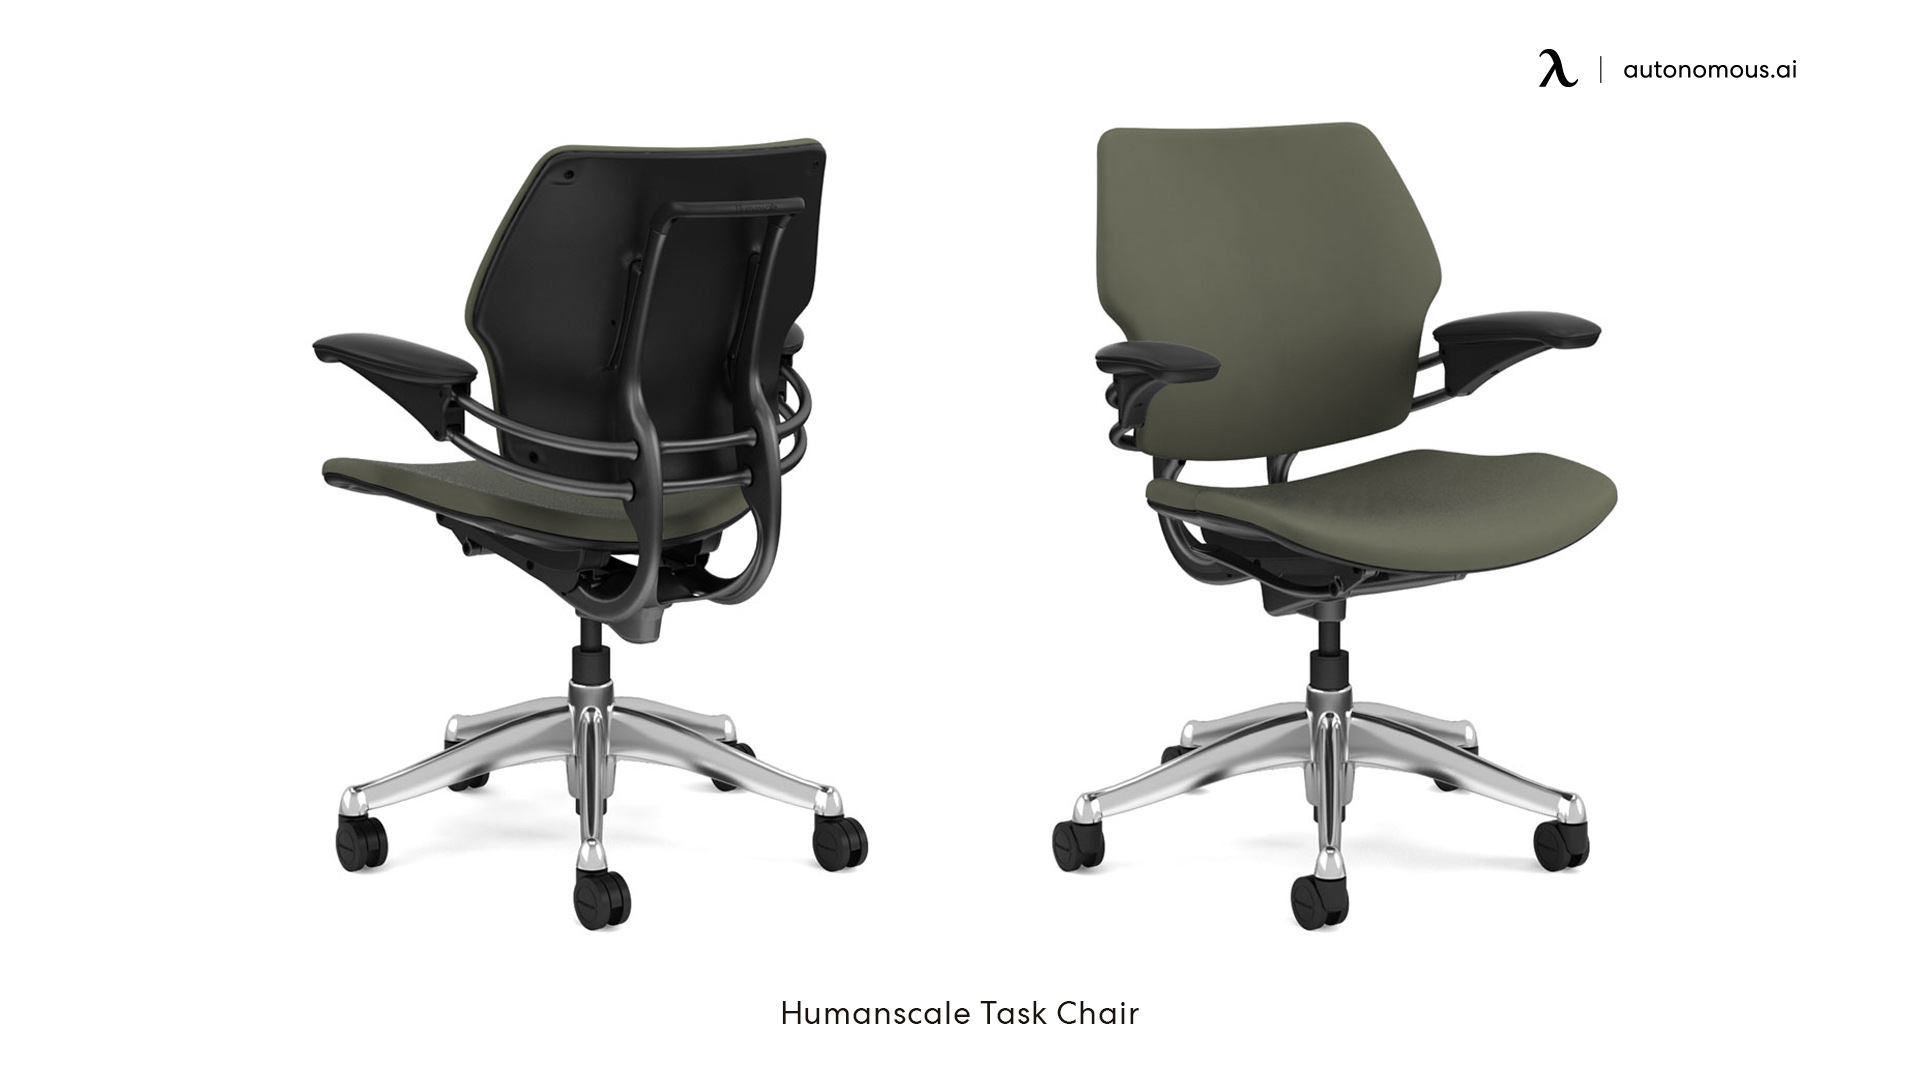 Humanscale Task Chair